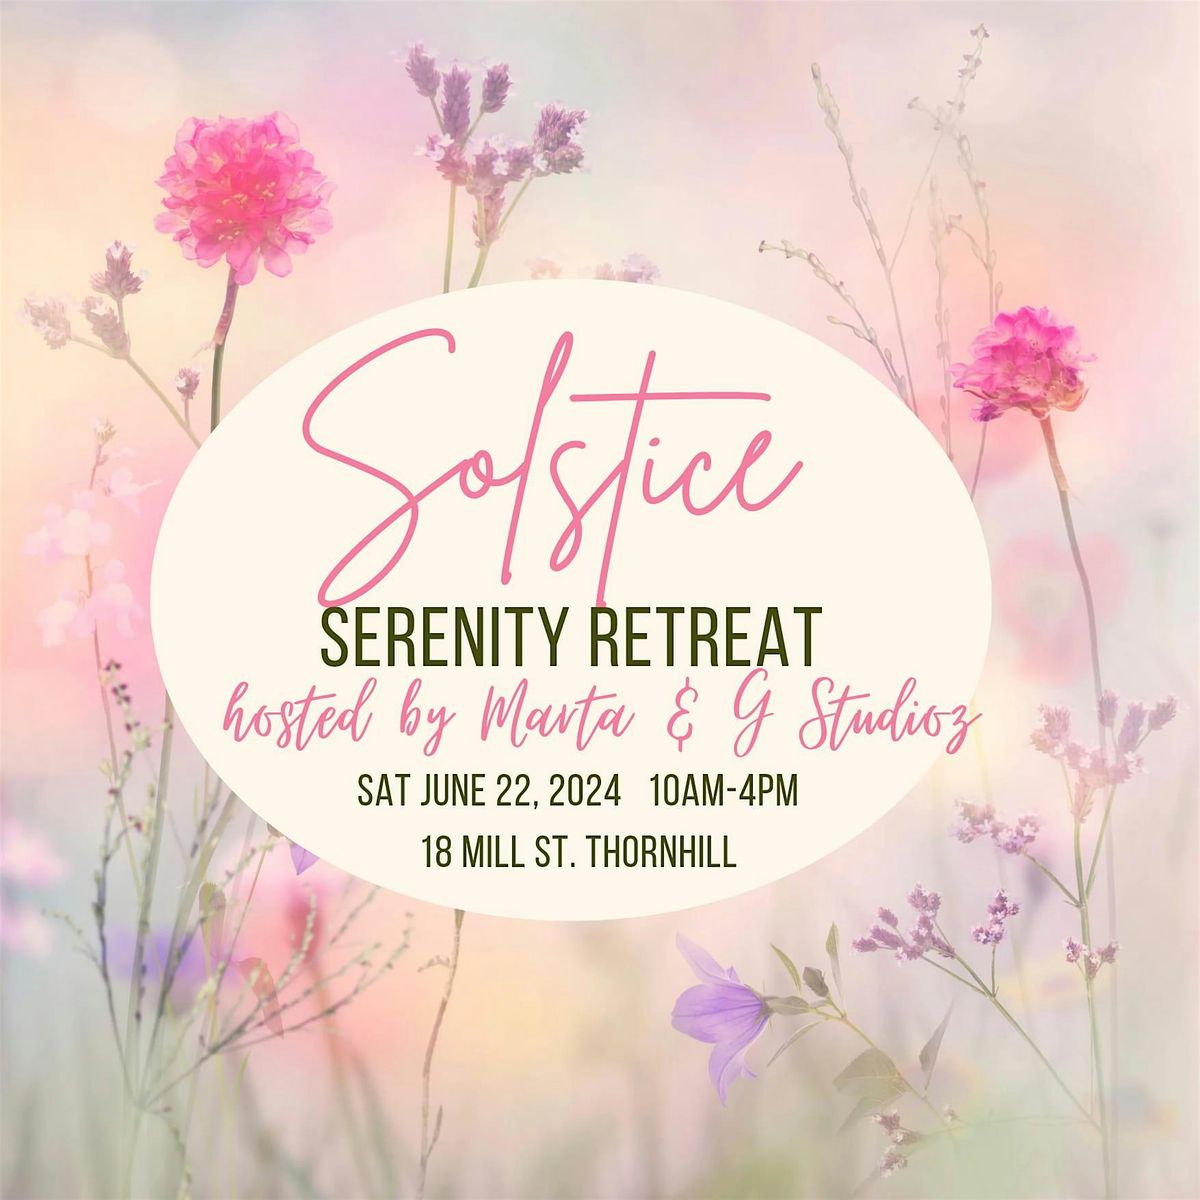 Solstice Serenity Retreat: Yoga, Breathwork, Crystal Meditation,  Soundbath